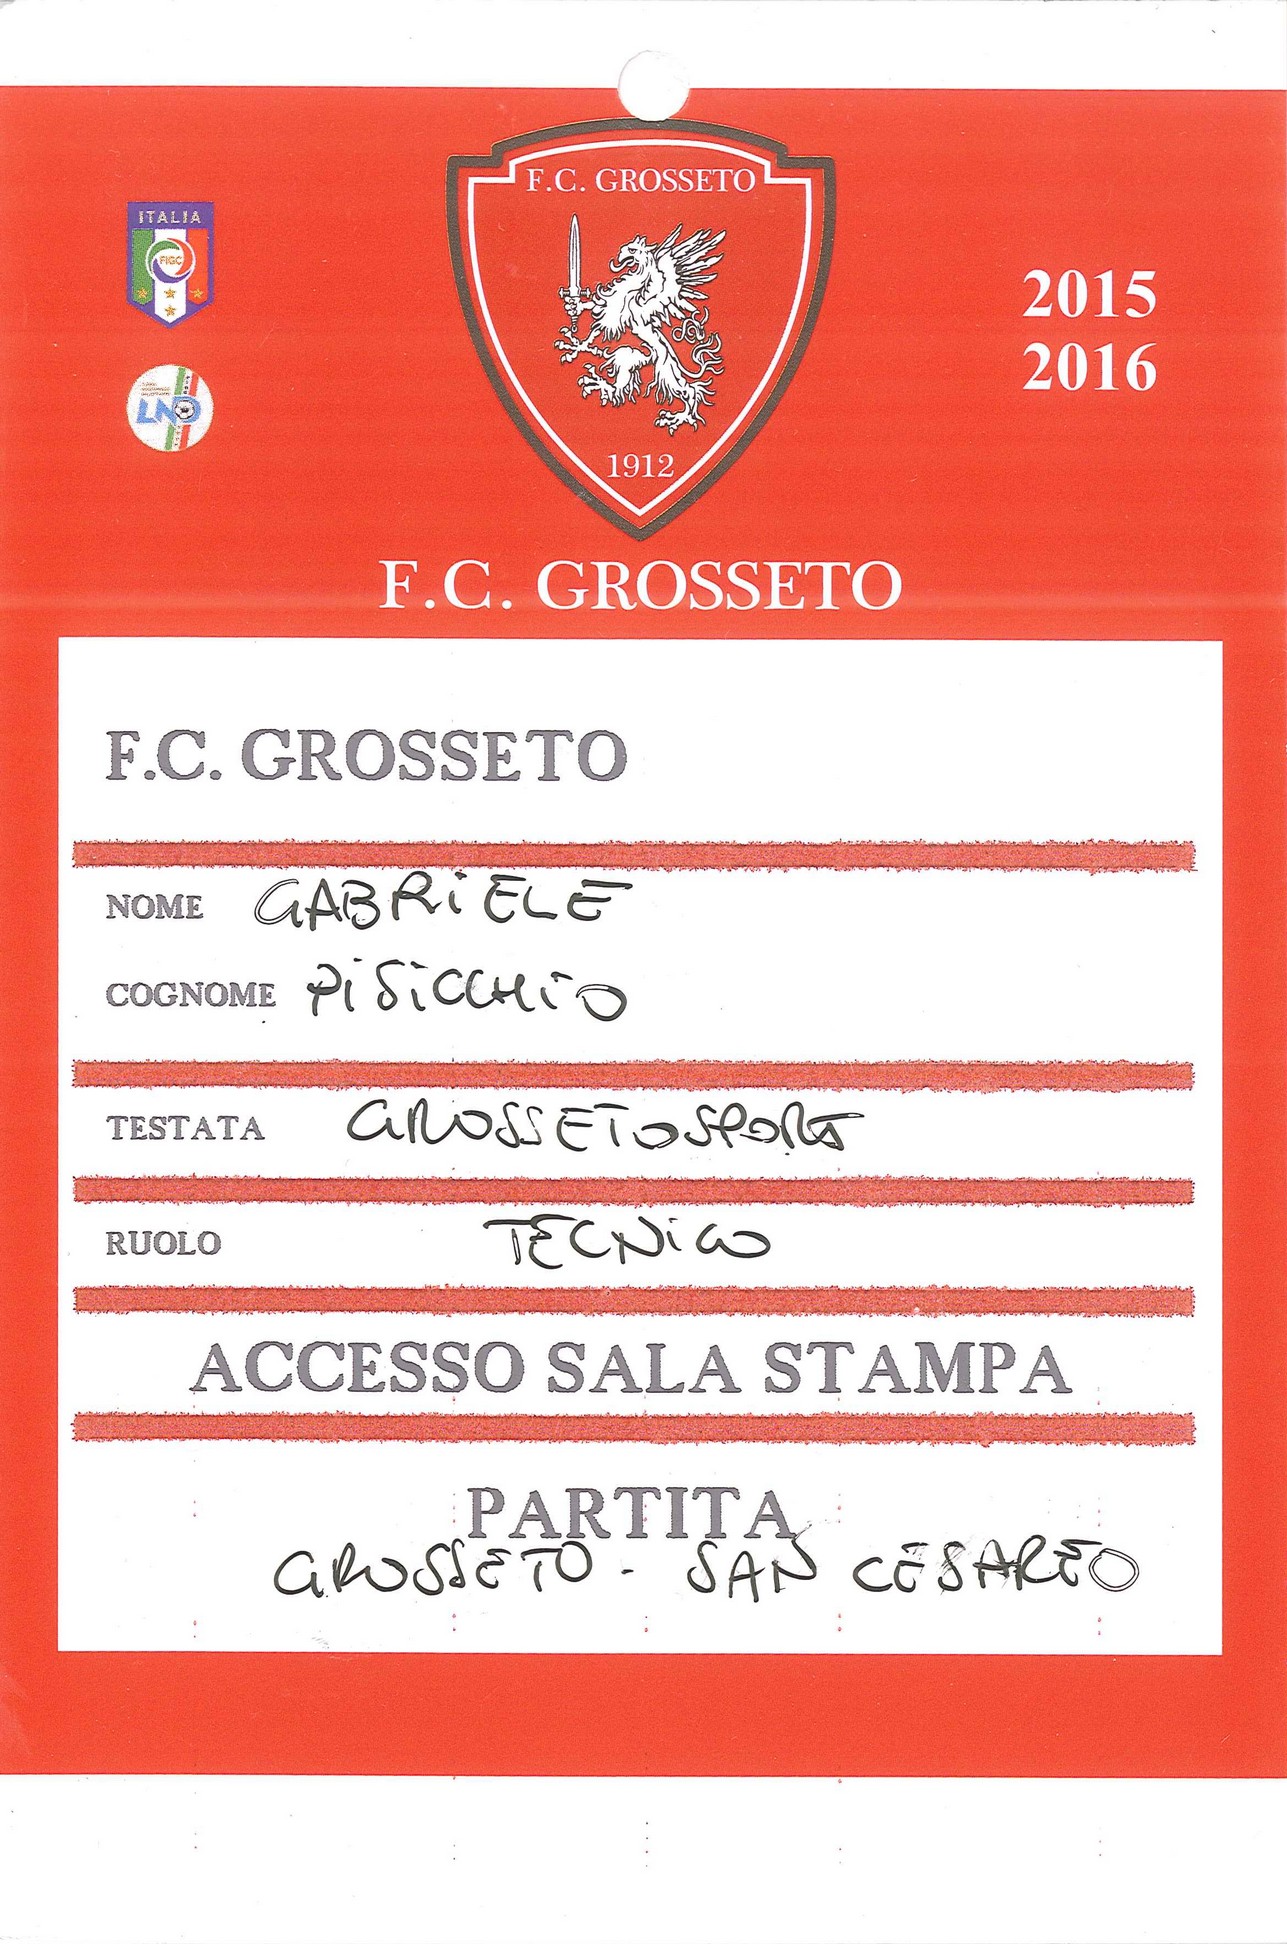 Pass FC Grosseto 2015.jpg